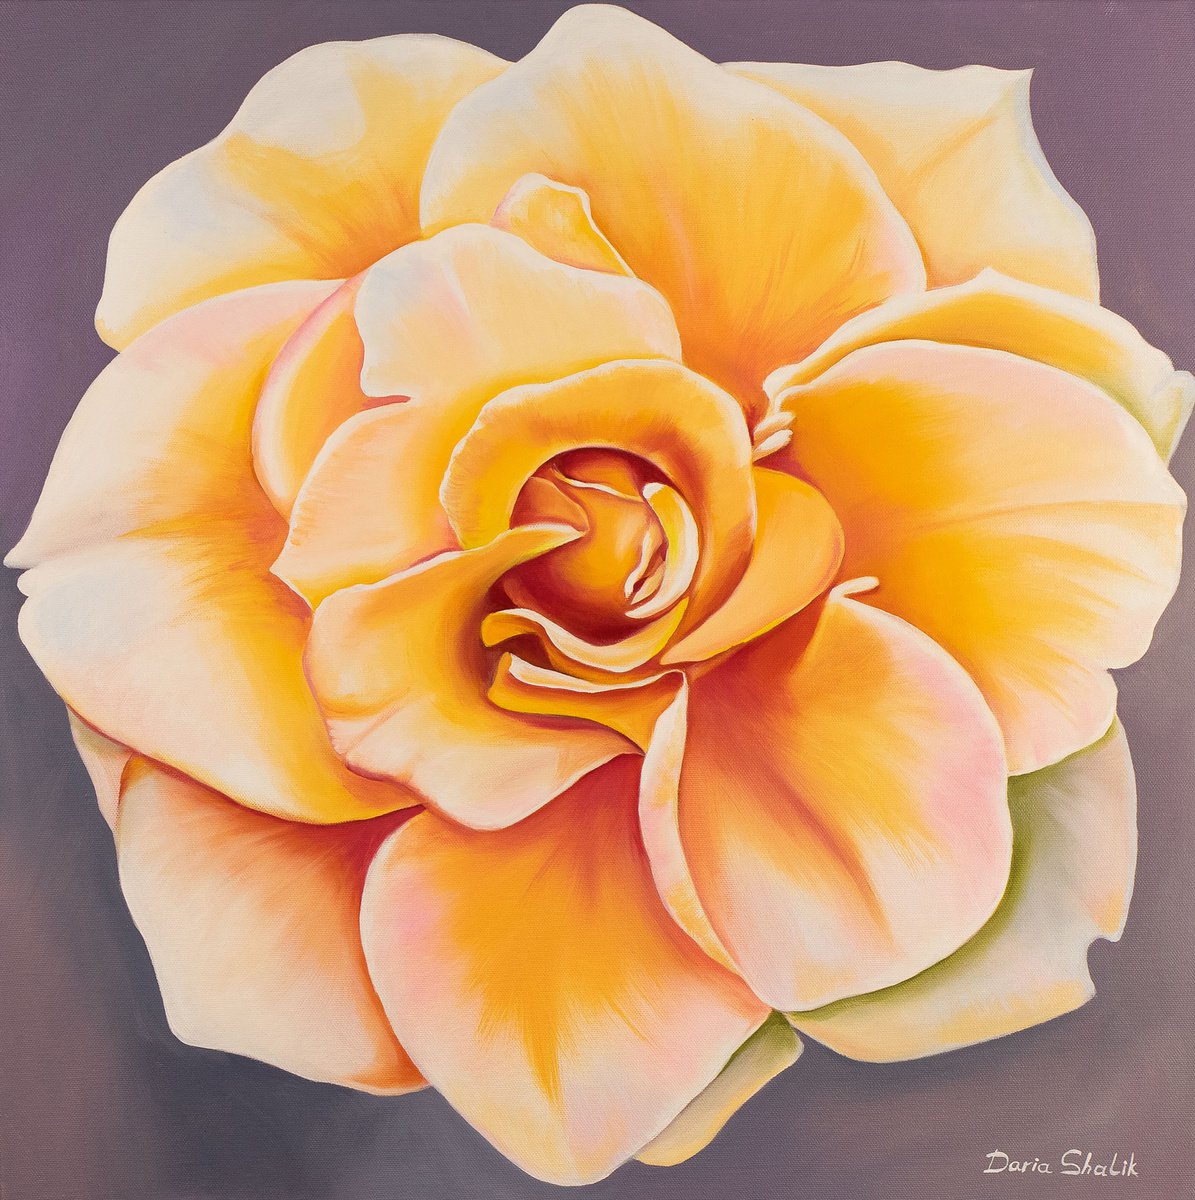 A peach rose named Adele by Daria Shalik